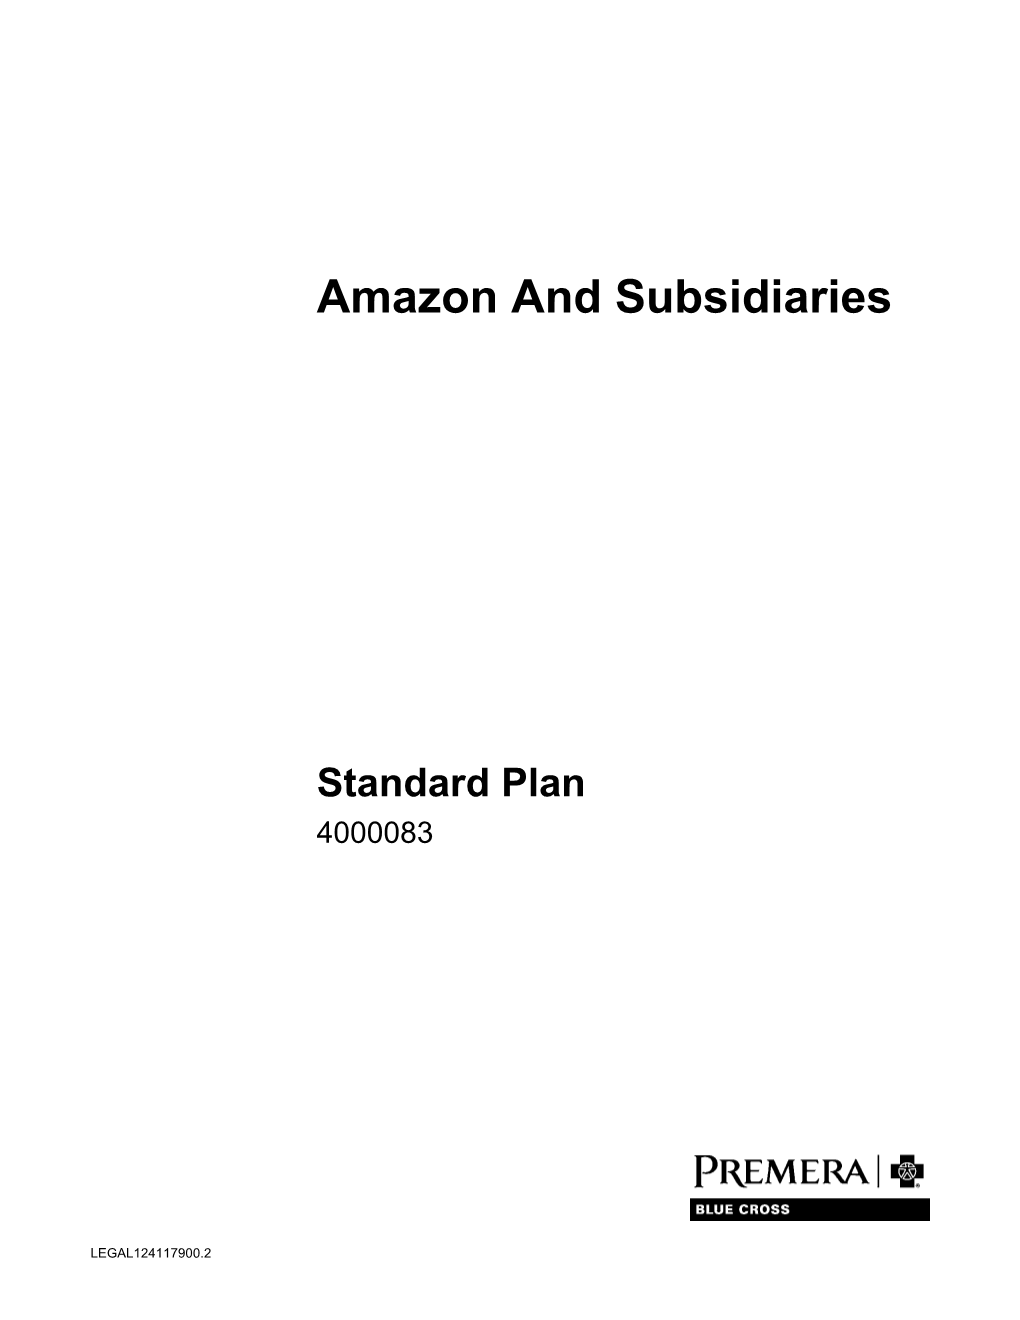 Amazon and Subsidiaries